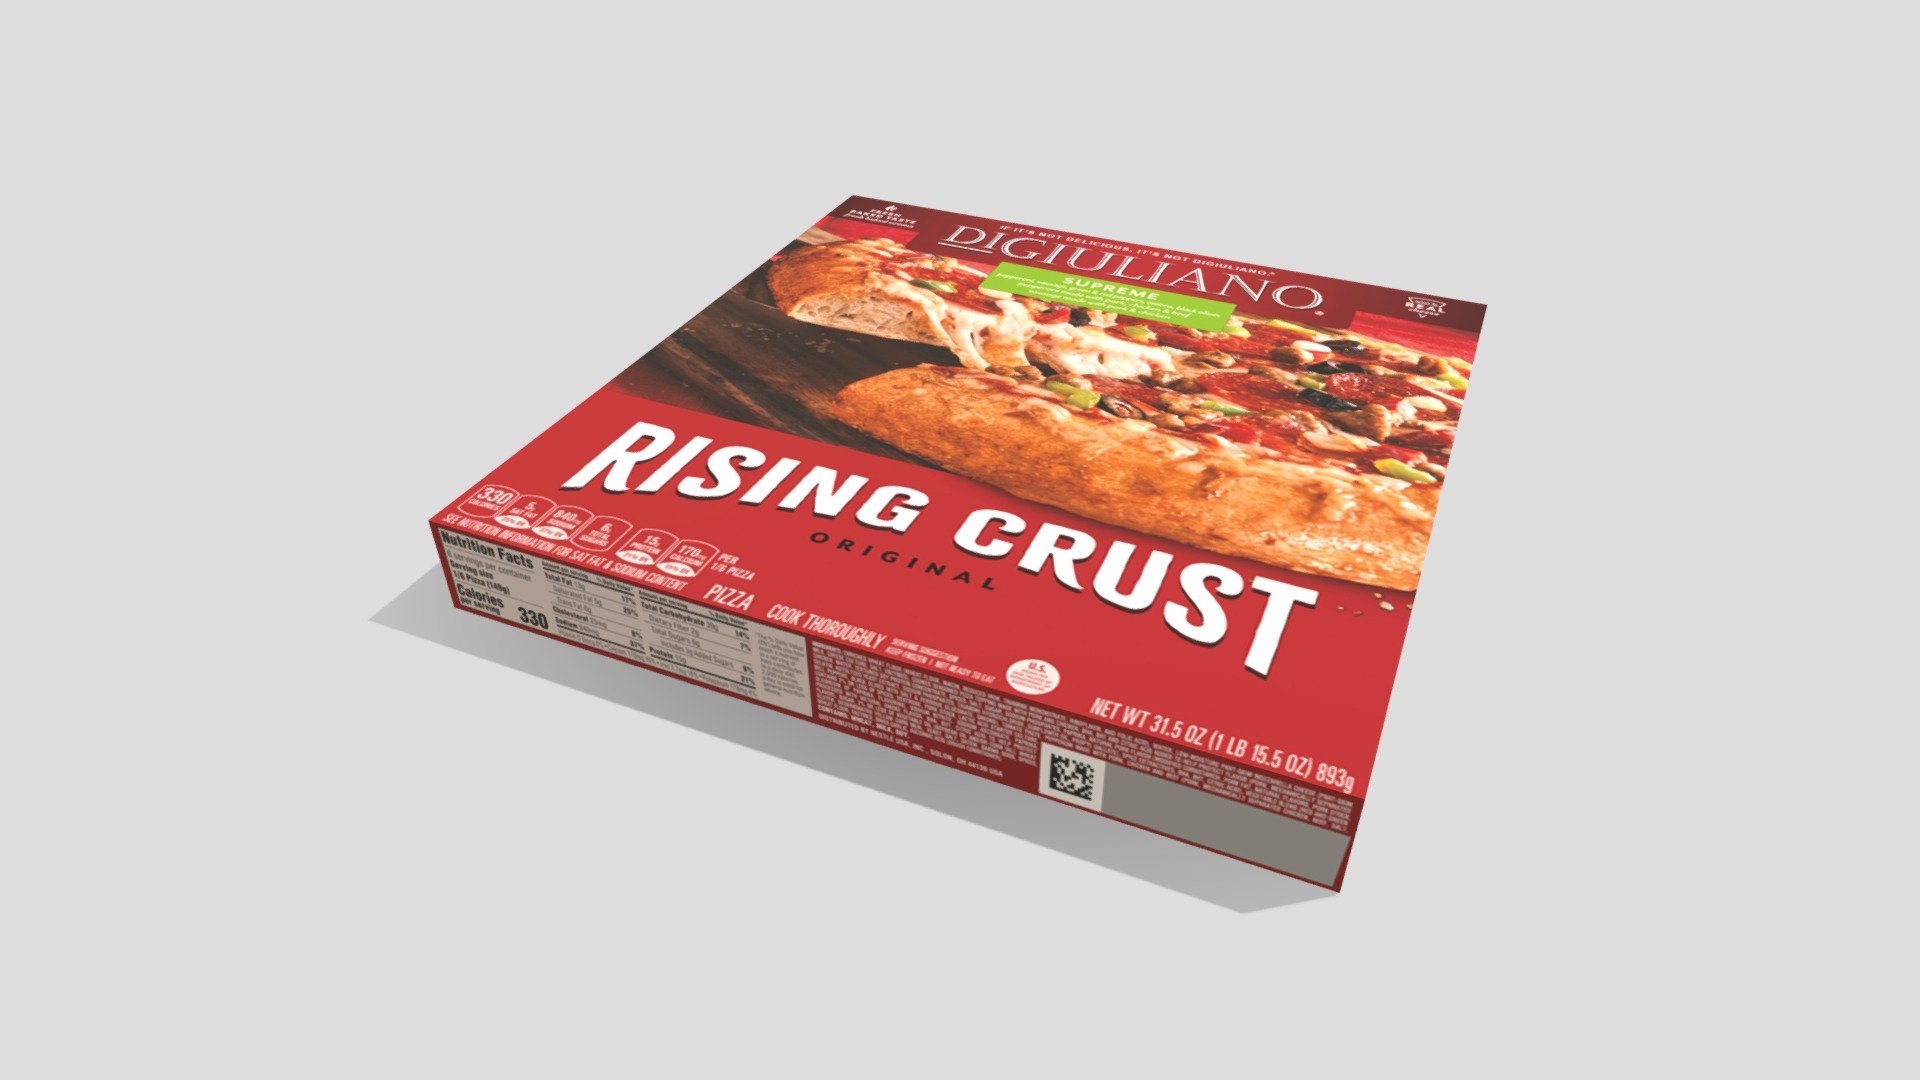 Open pizza box - Buy Royalty Free 3D model by FrancescoMilanese  (@FrancescoMilanese) [e1897d7]